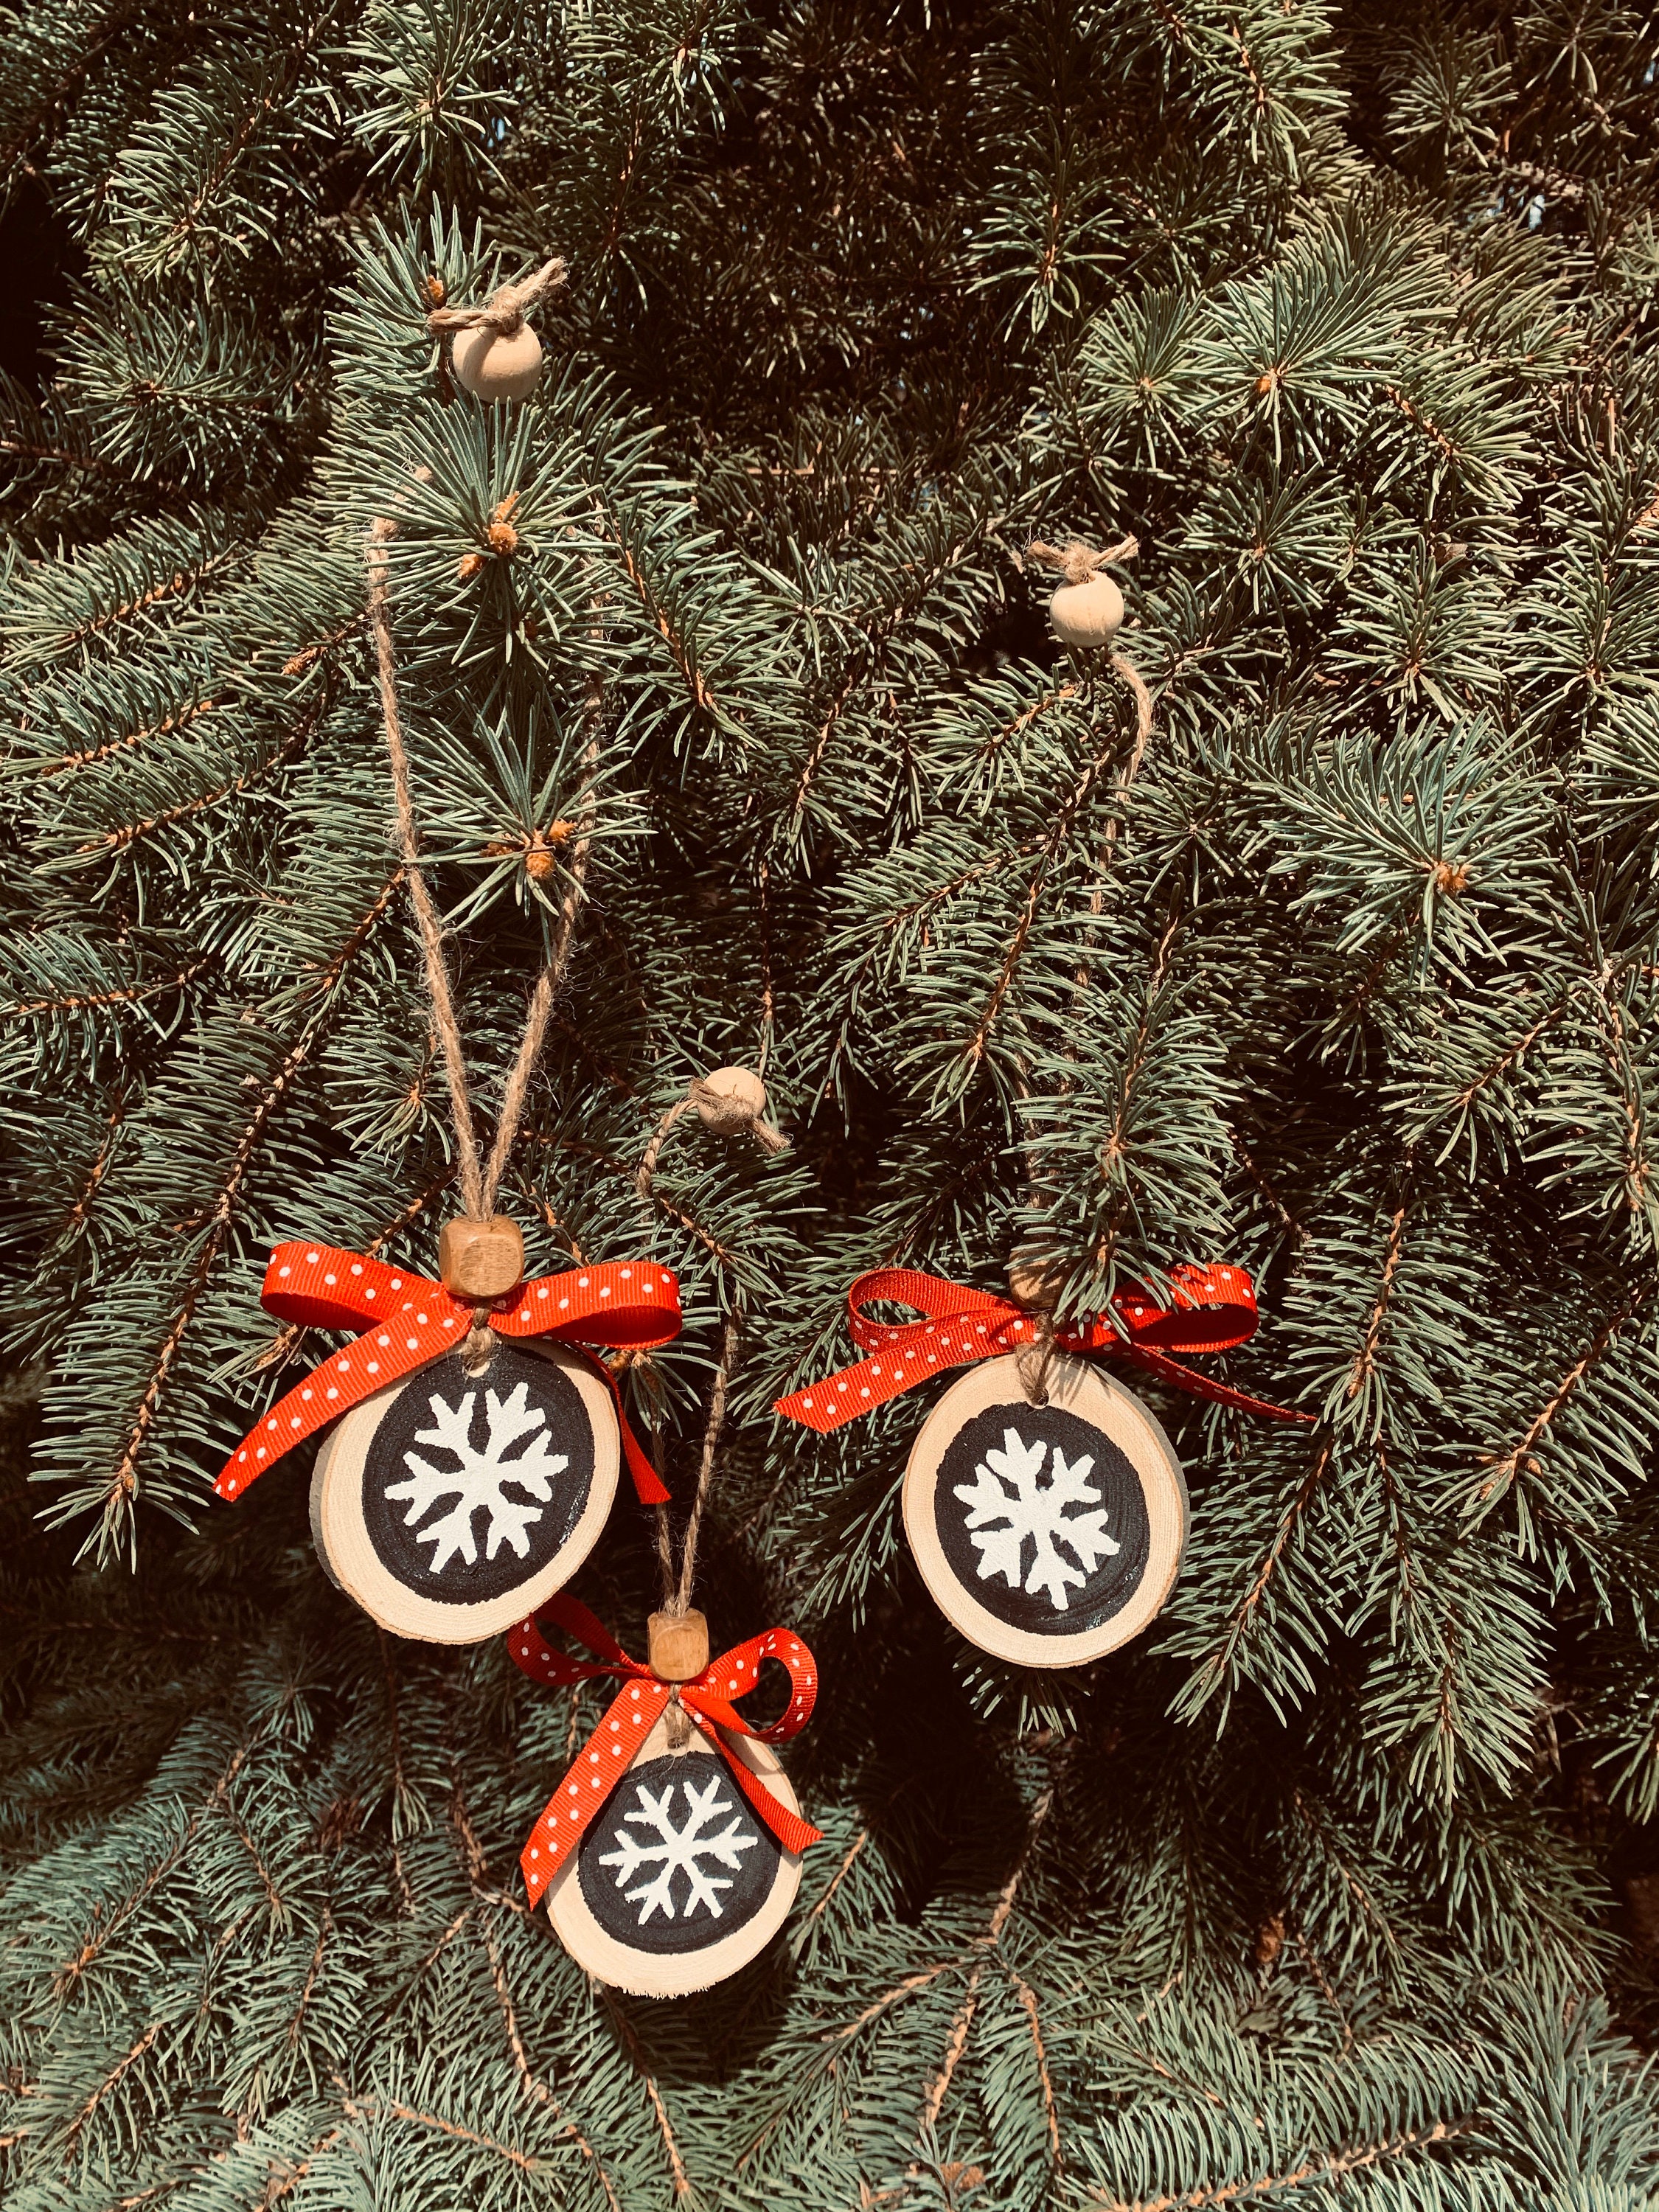 Best Neighbors Ever Wood Slice Ornament, Best Neighbor Ever Wood Ornament,  Rustic Christmas Ornament, Wood Slice Ornament